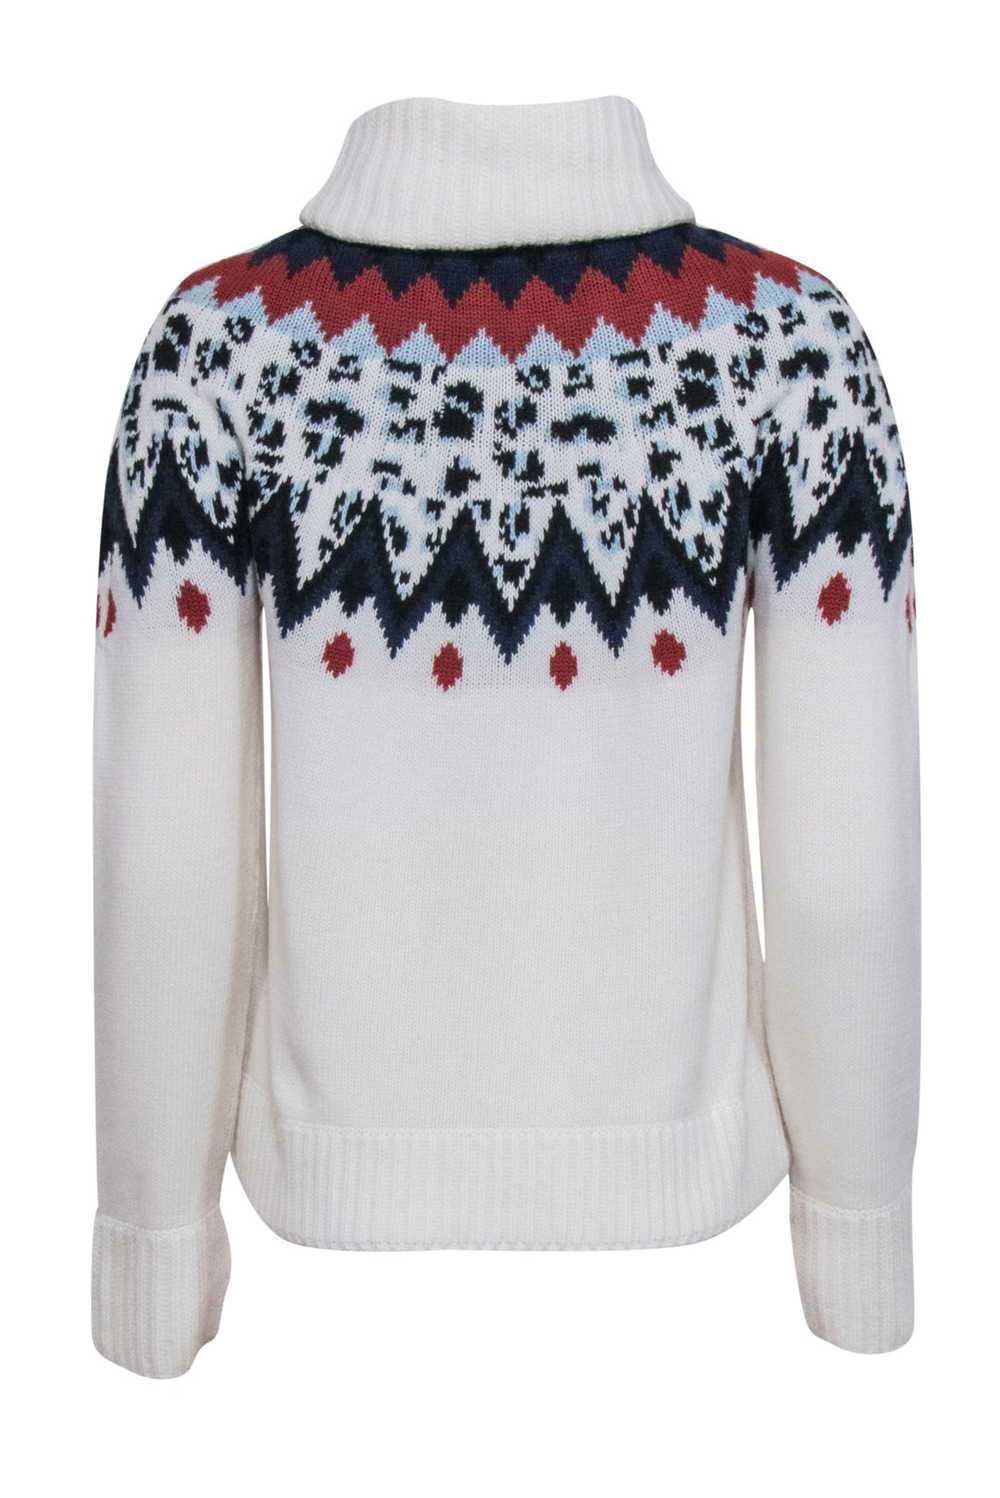 Veronica Beard - Ivory Turtleneck Sweater Sz M - image 3